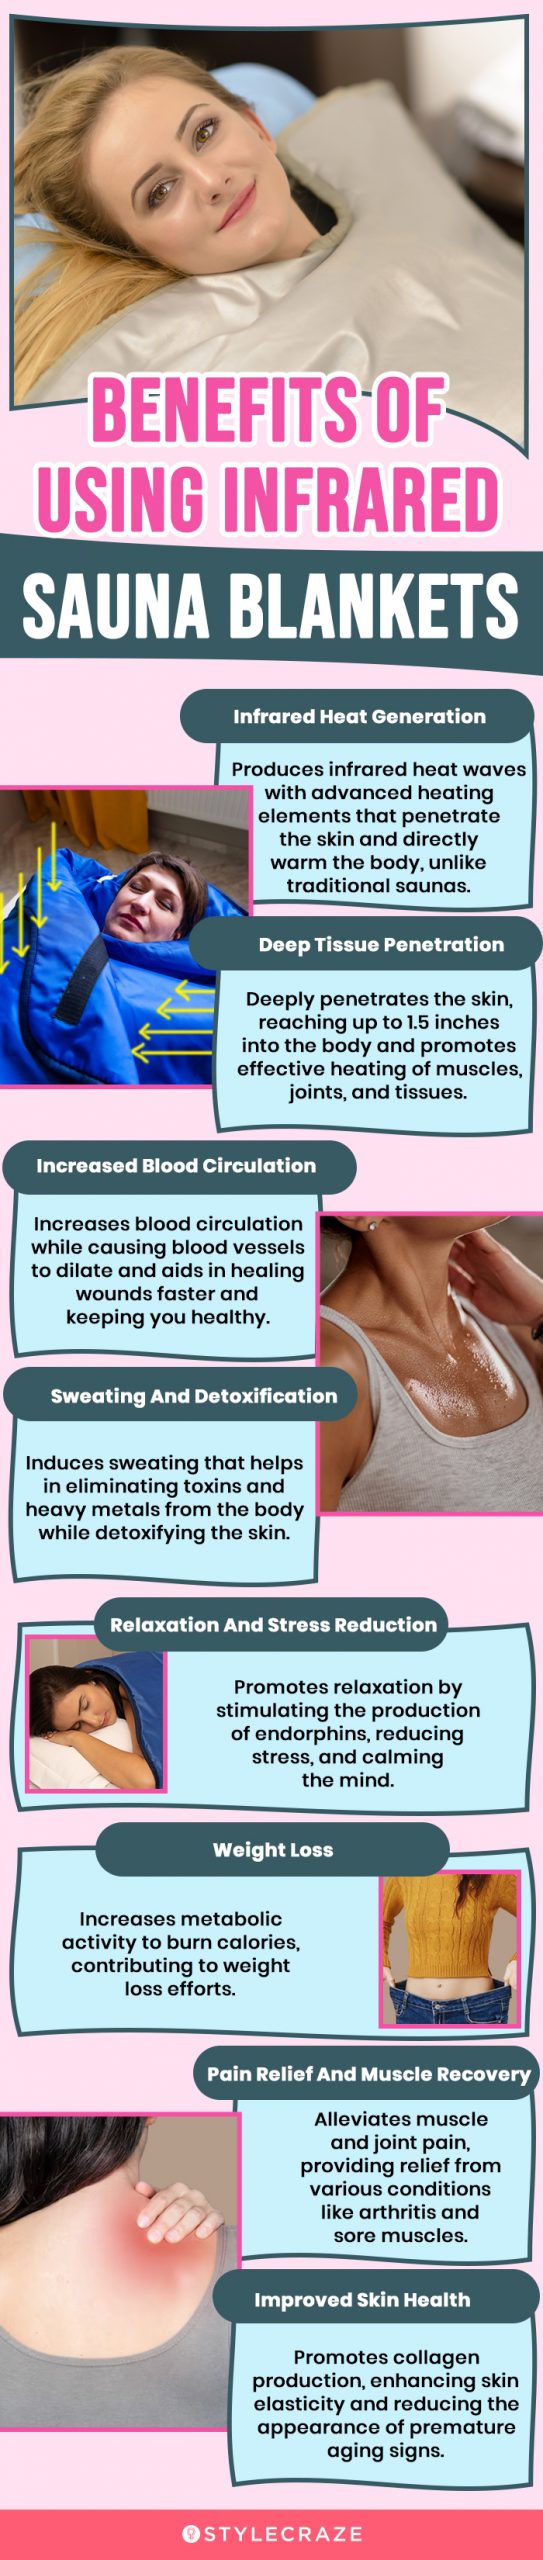 Benefits Of Using Infrared Sauna Blankets (infographic)